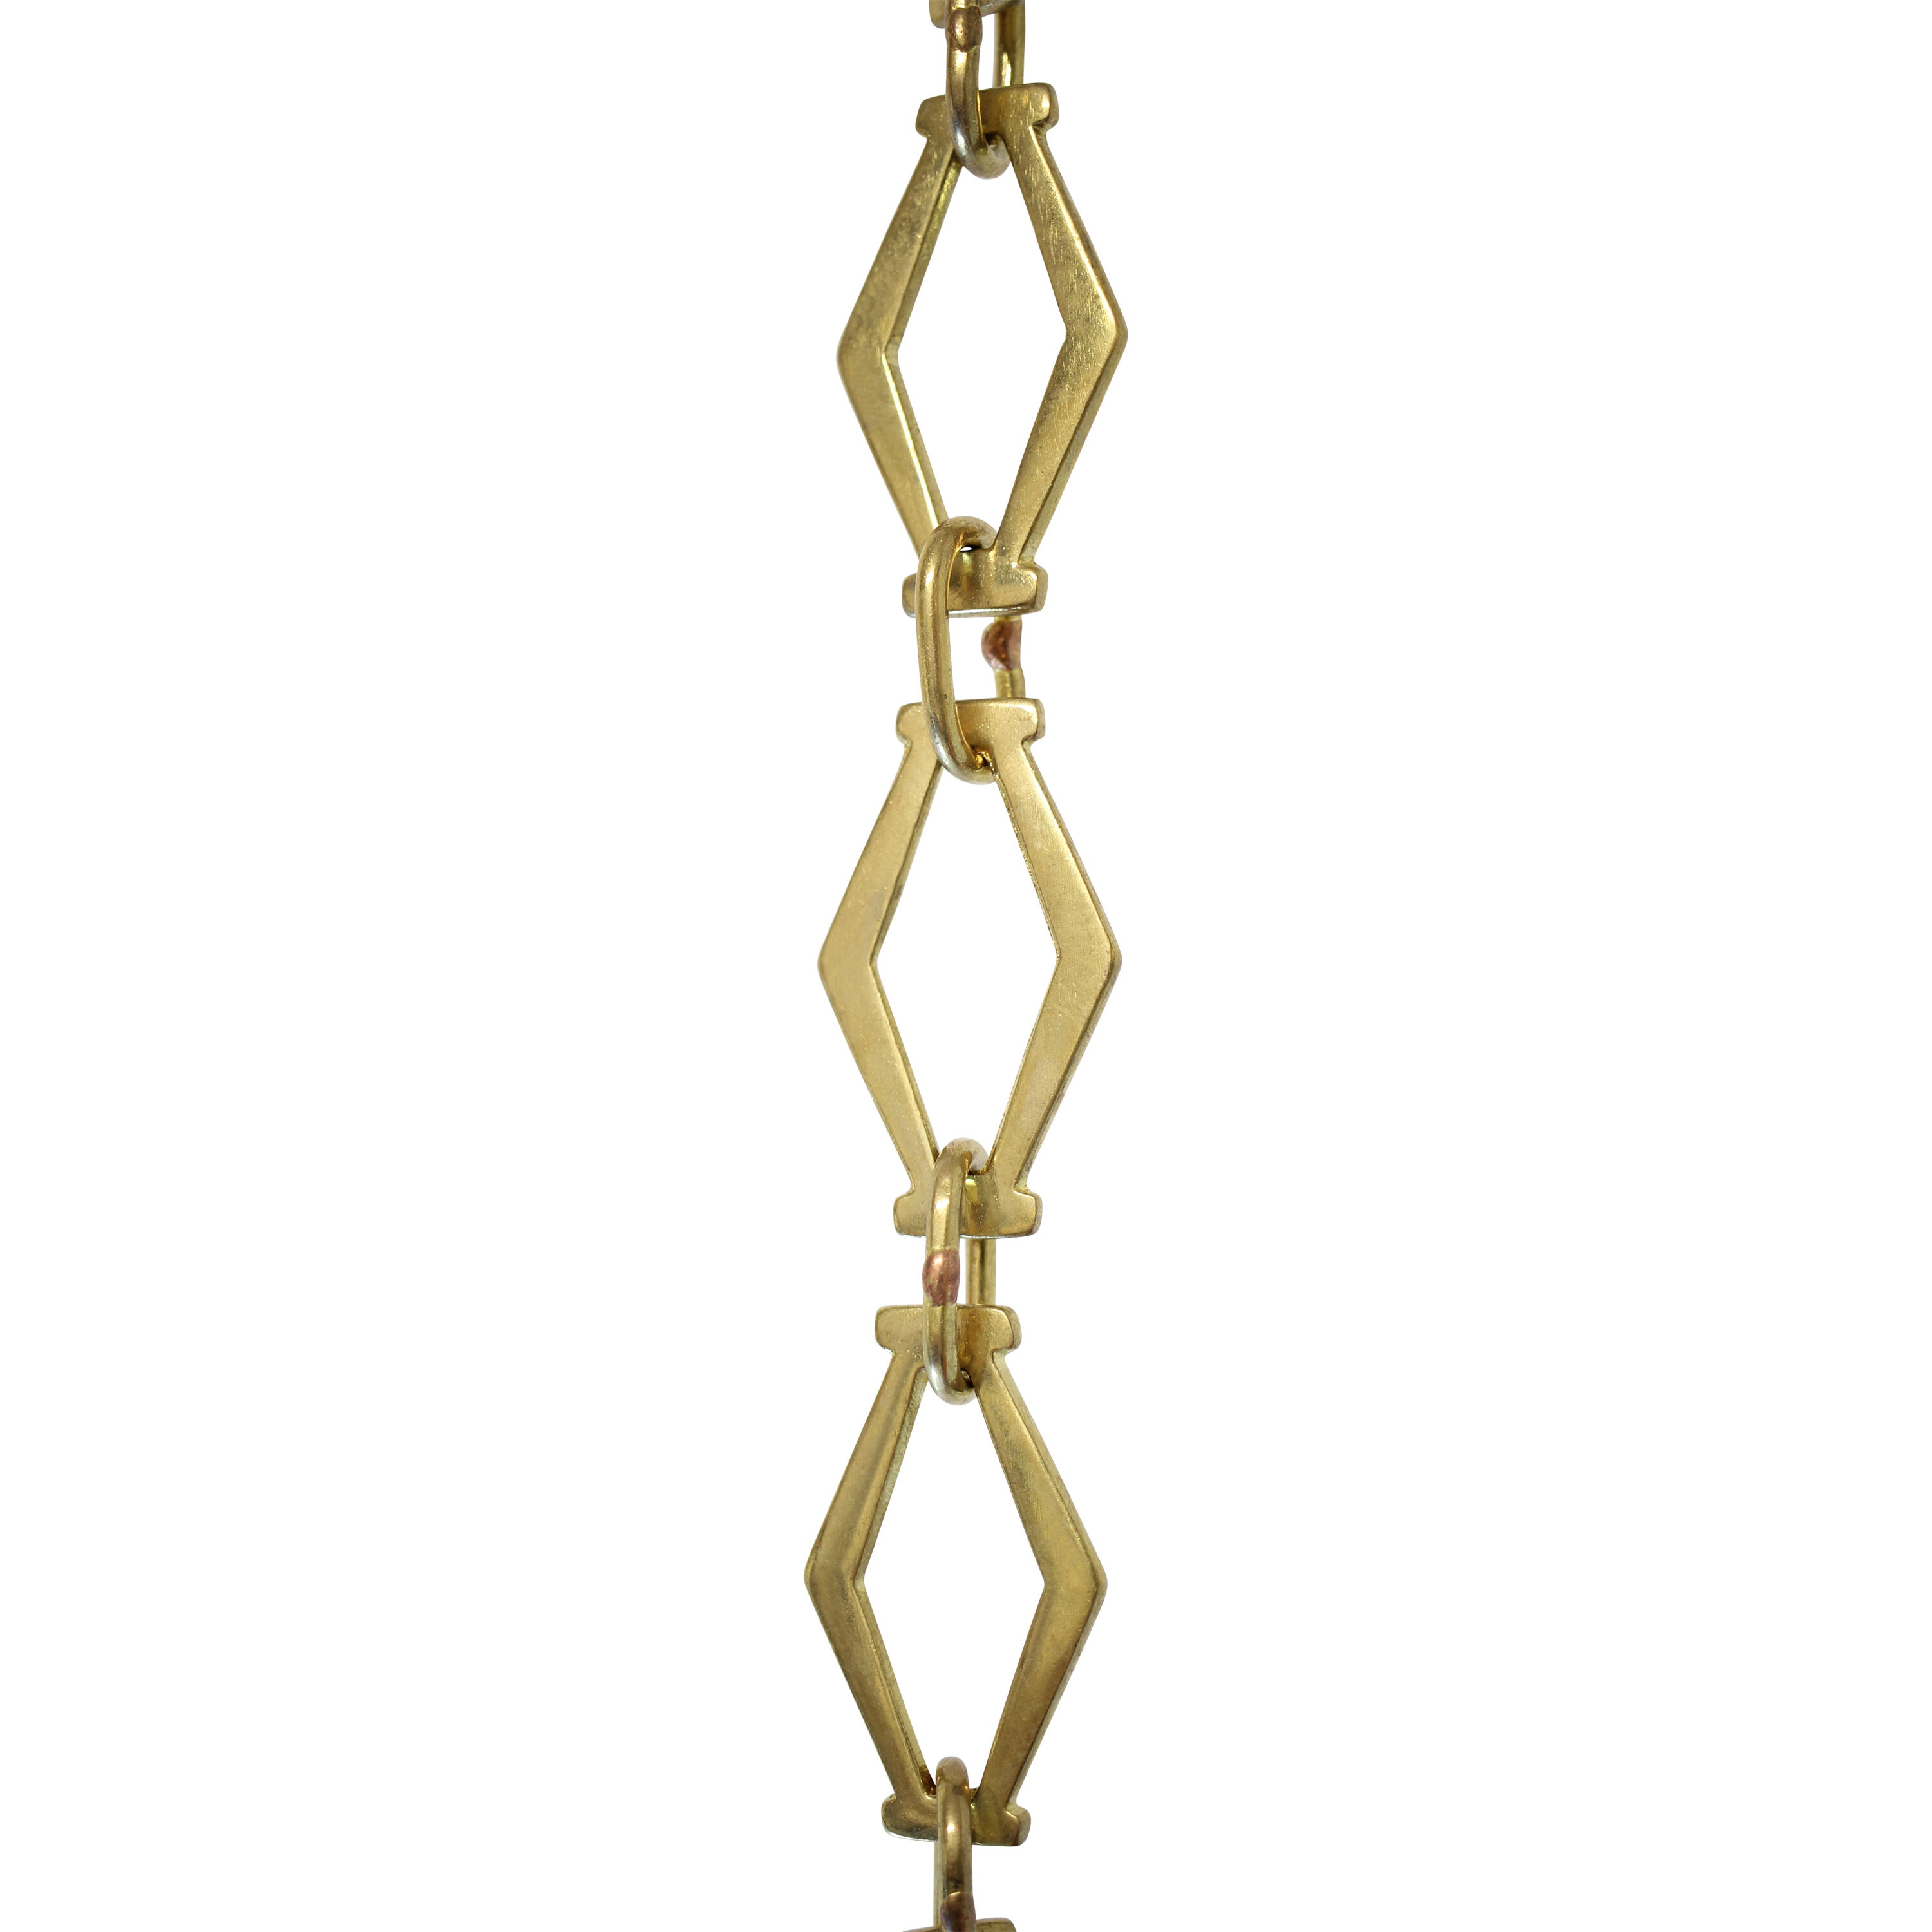 RCH Supply Company Rectangular Unwelded Decorative Fixture Chain; Antique Brass